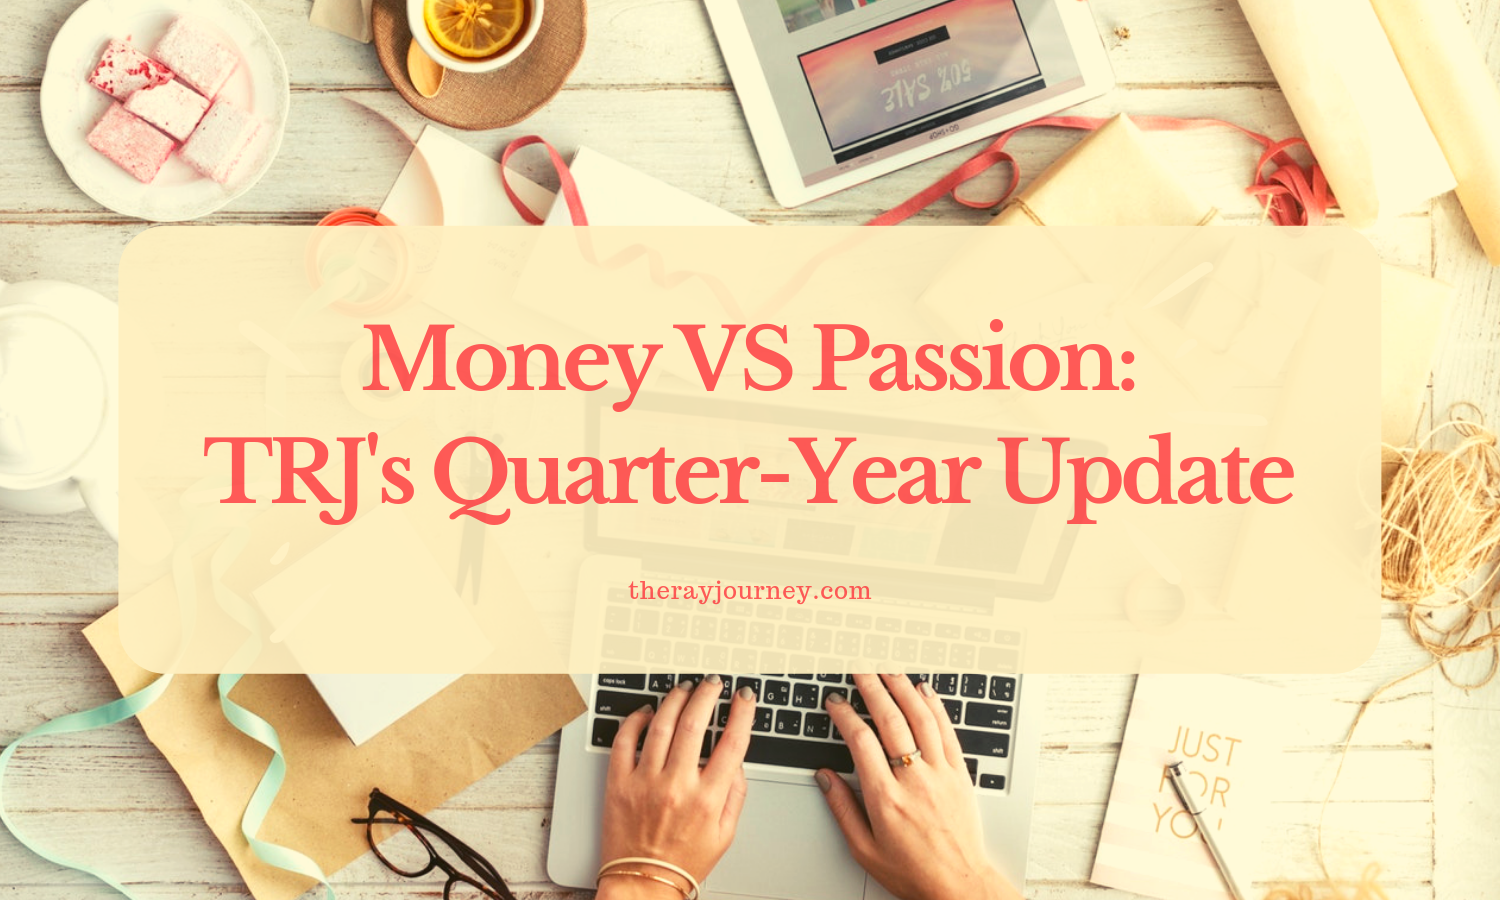 Money VS Passion: TRJ’s Quarter-Year Update